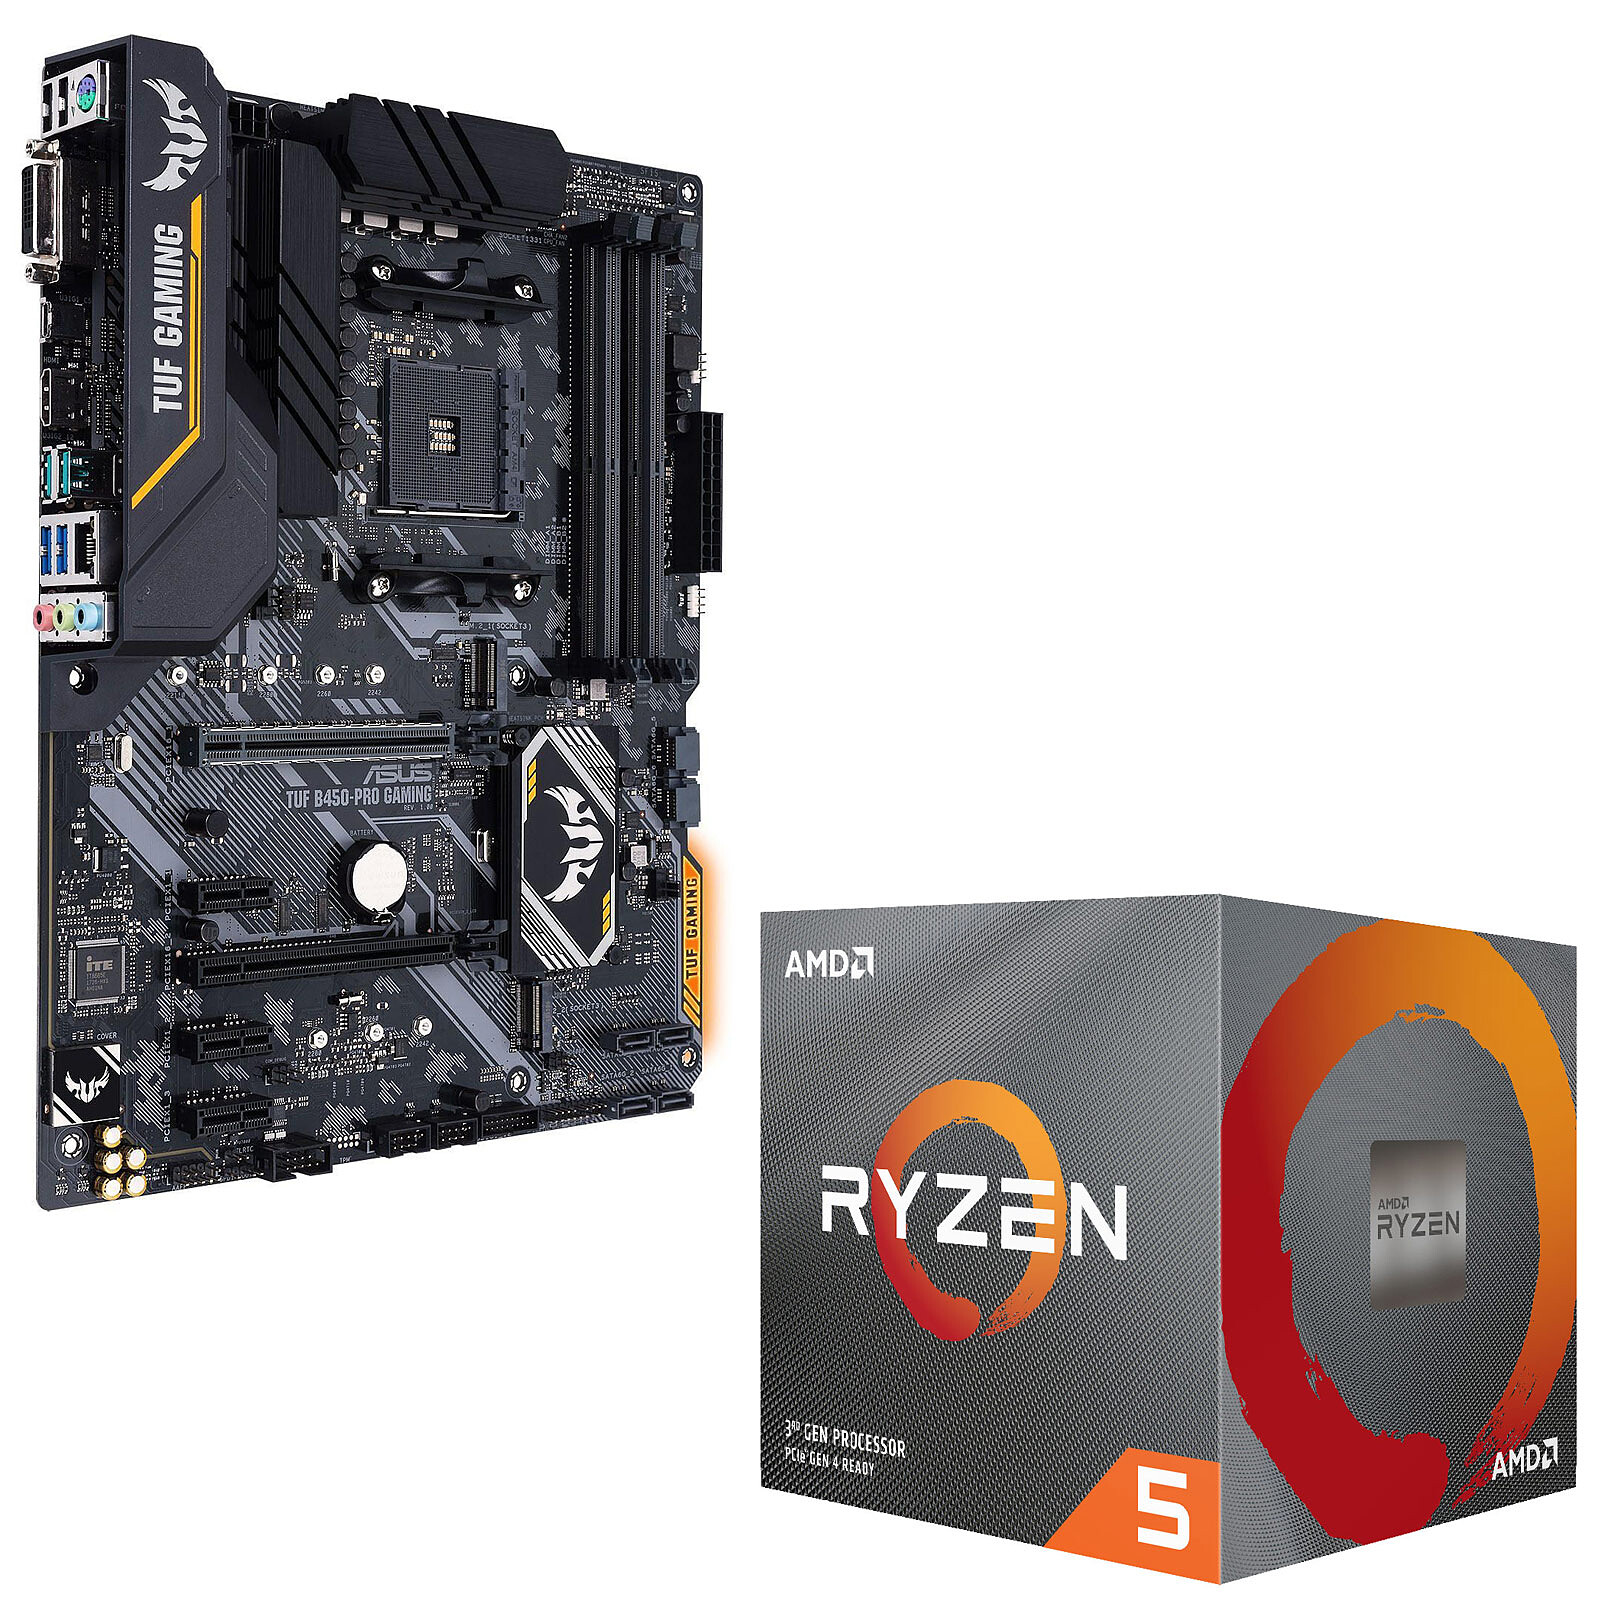 Ryzen5 2600 b450 メモリ16gb セット - PCパーツ